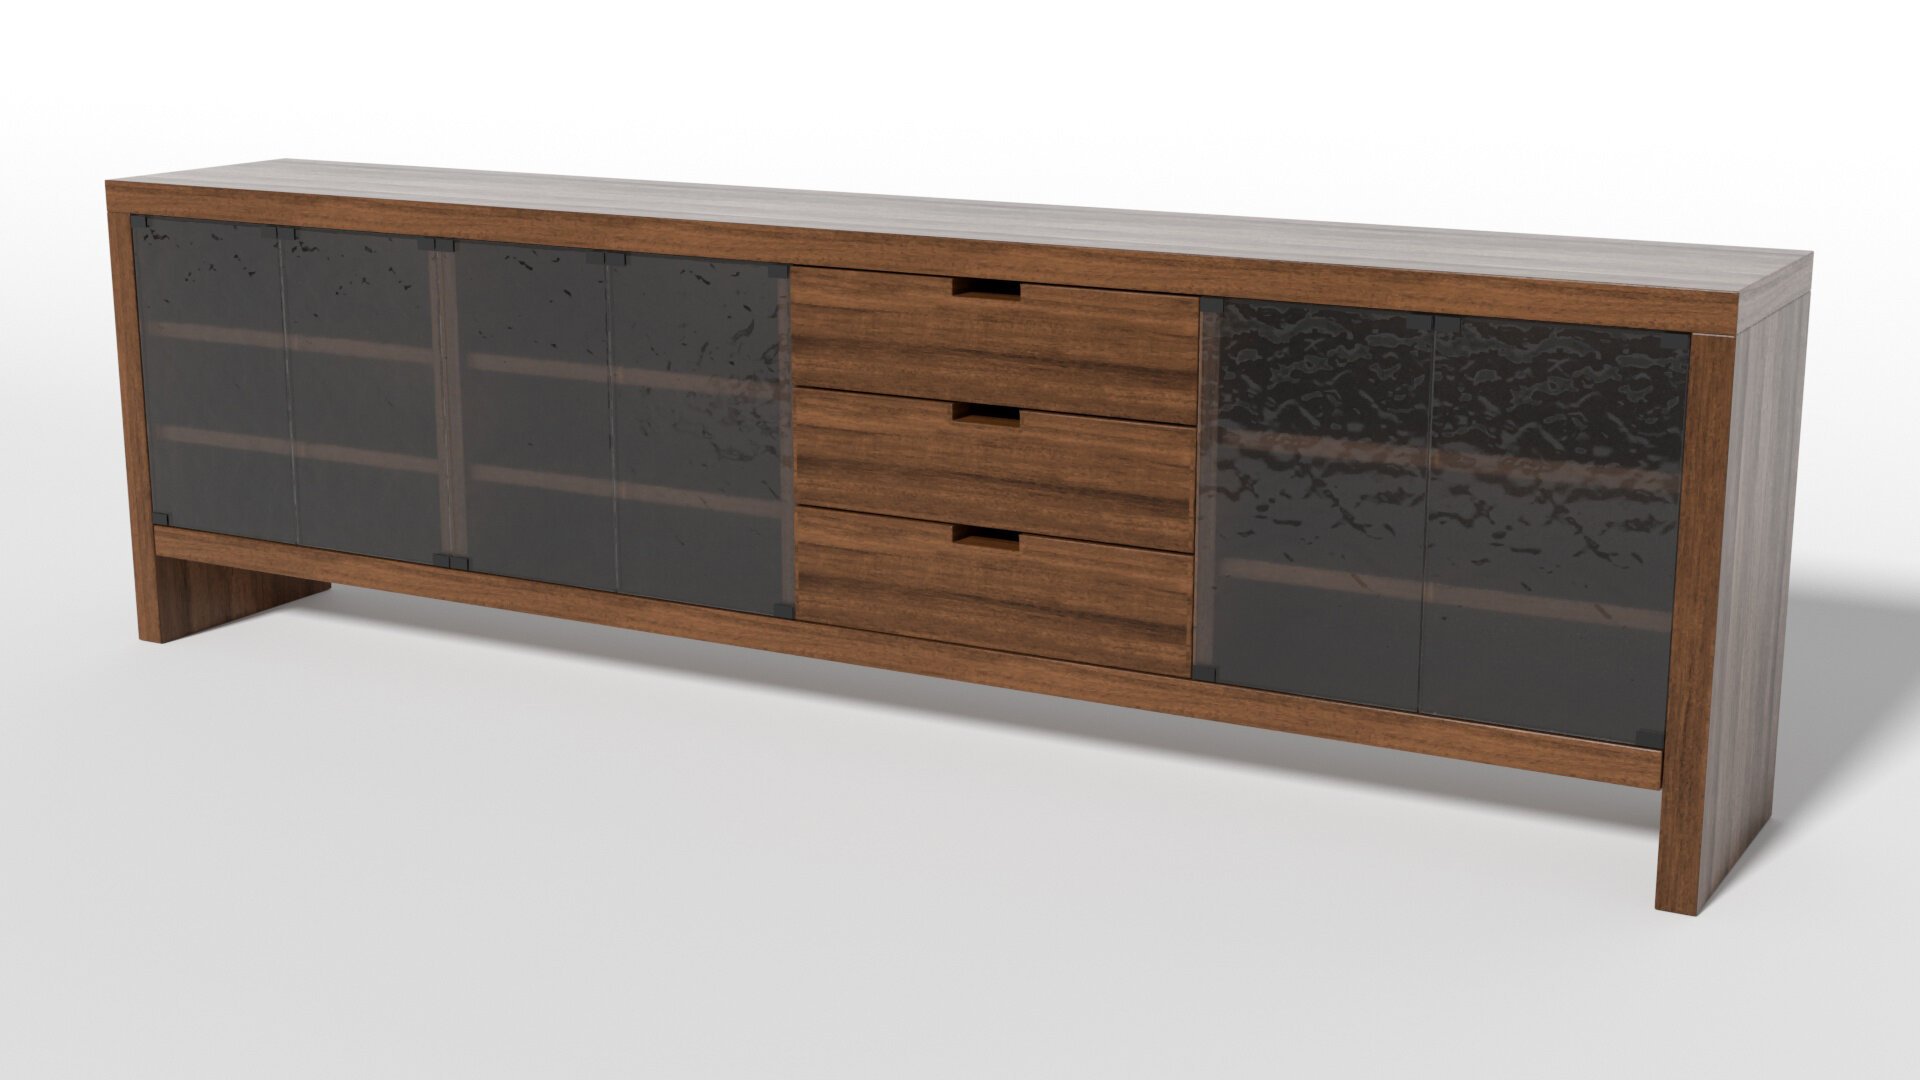 EK_Reedy_Furniture_Corbets_Console_II_with_glass_doors_luxury_furniture_modern_solid_walnut_angle.jpg